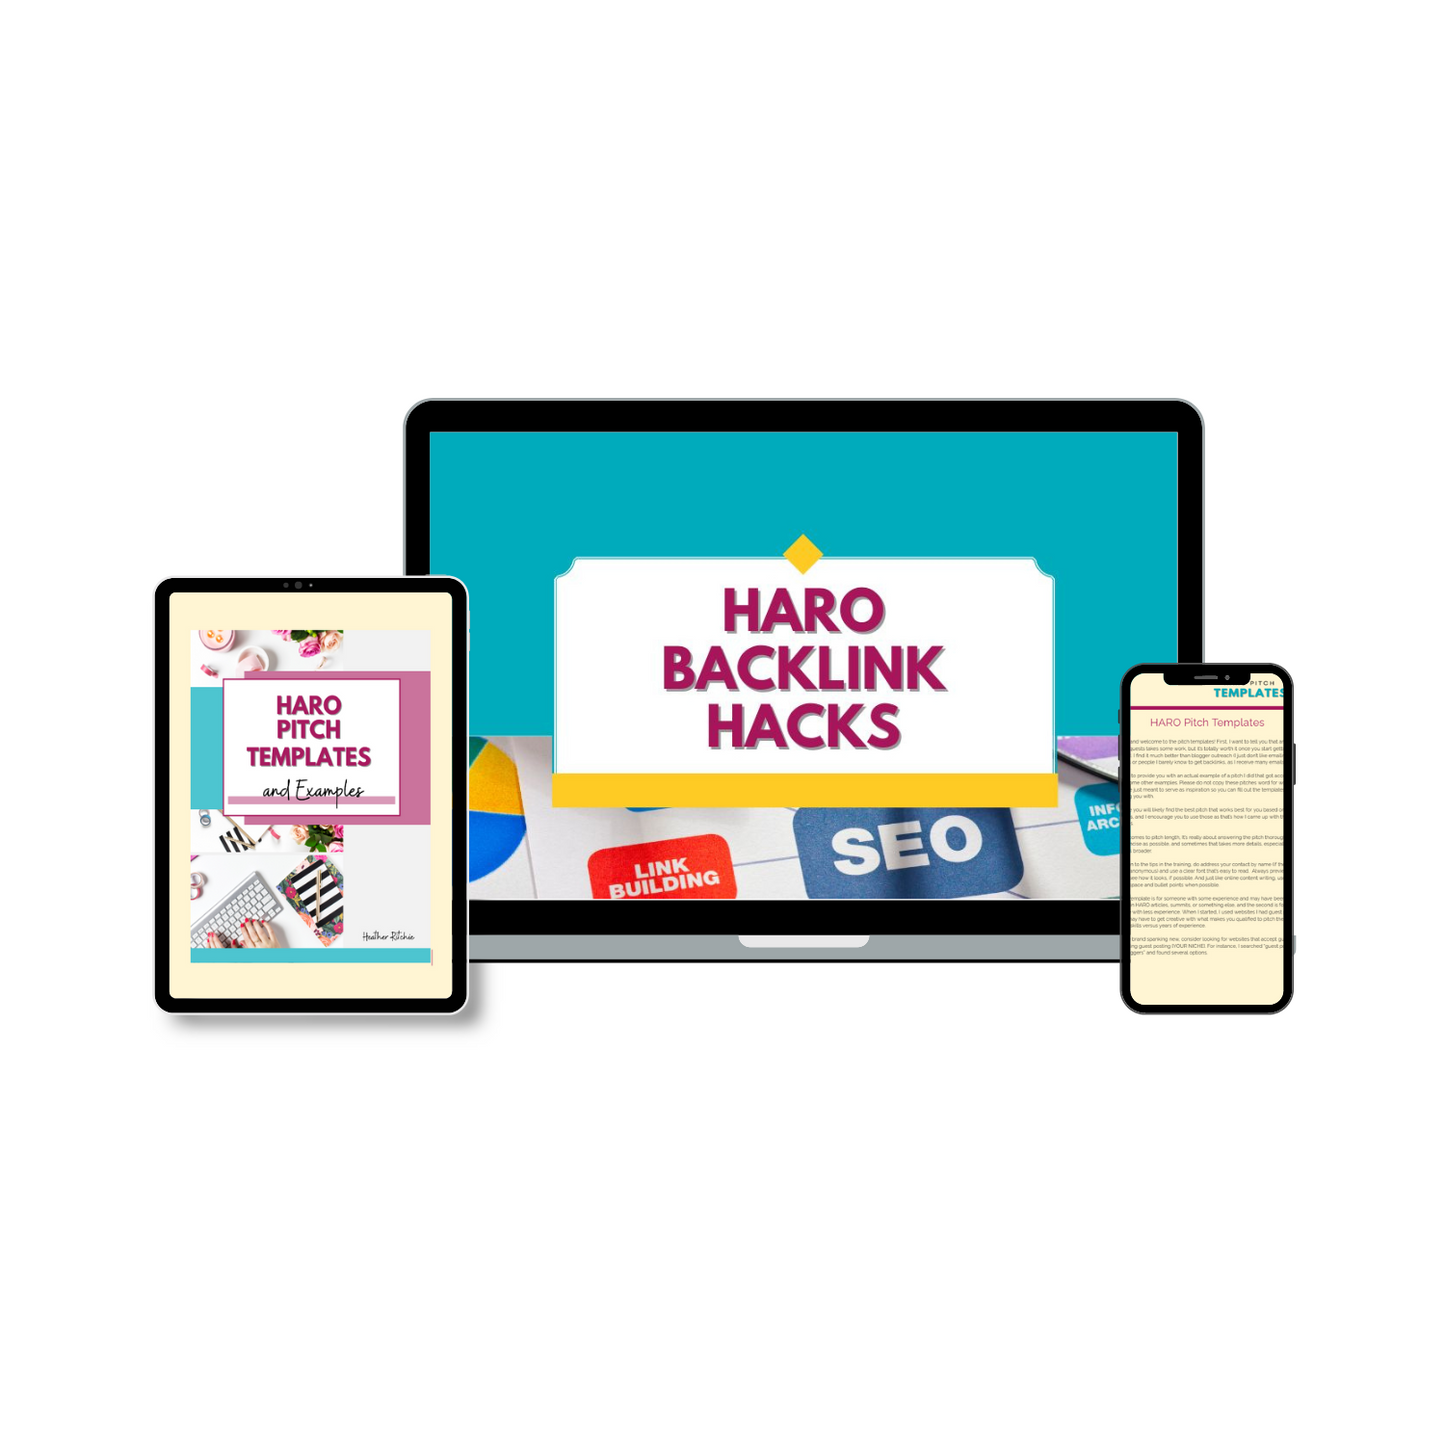 HARO Backlink Hacks